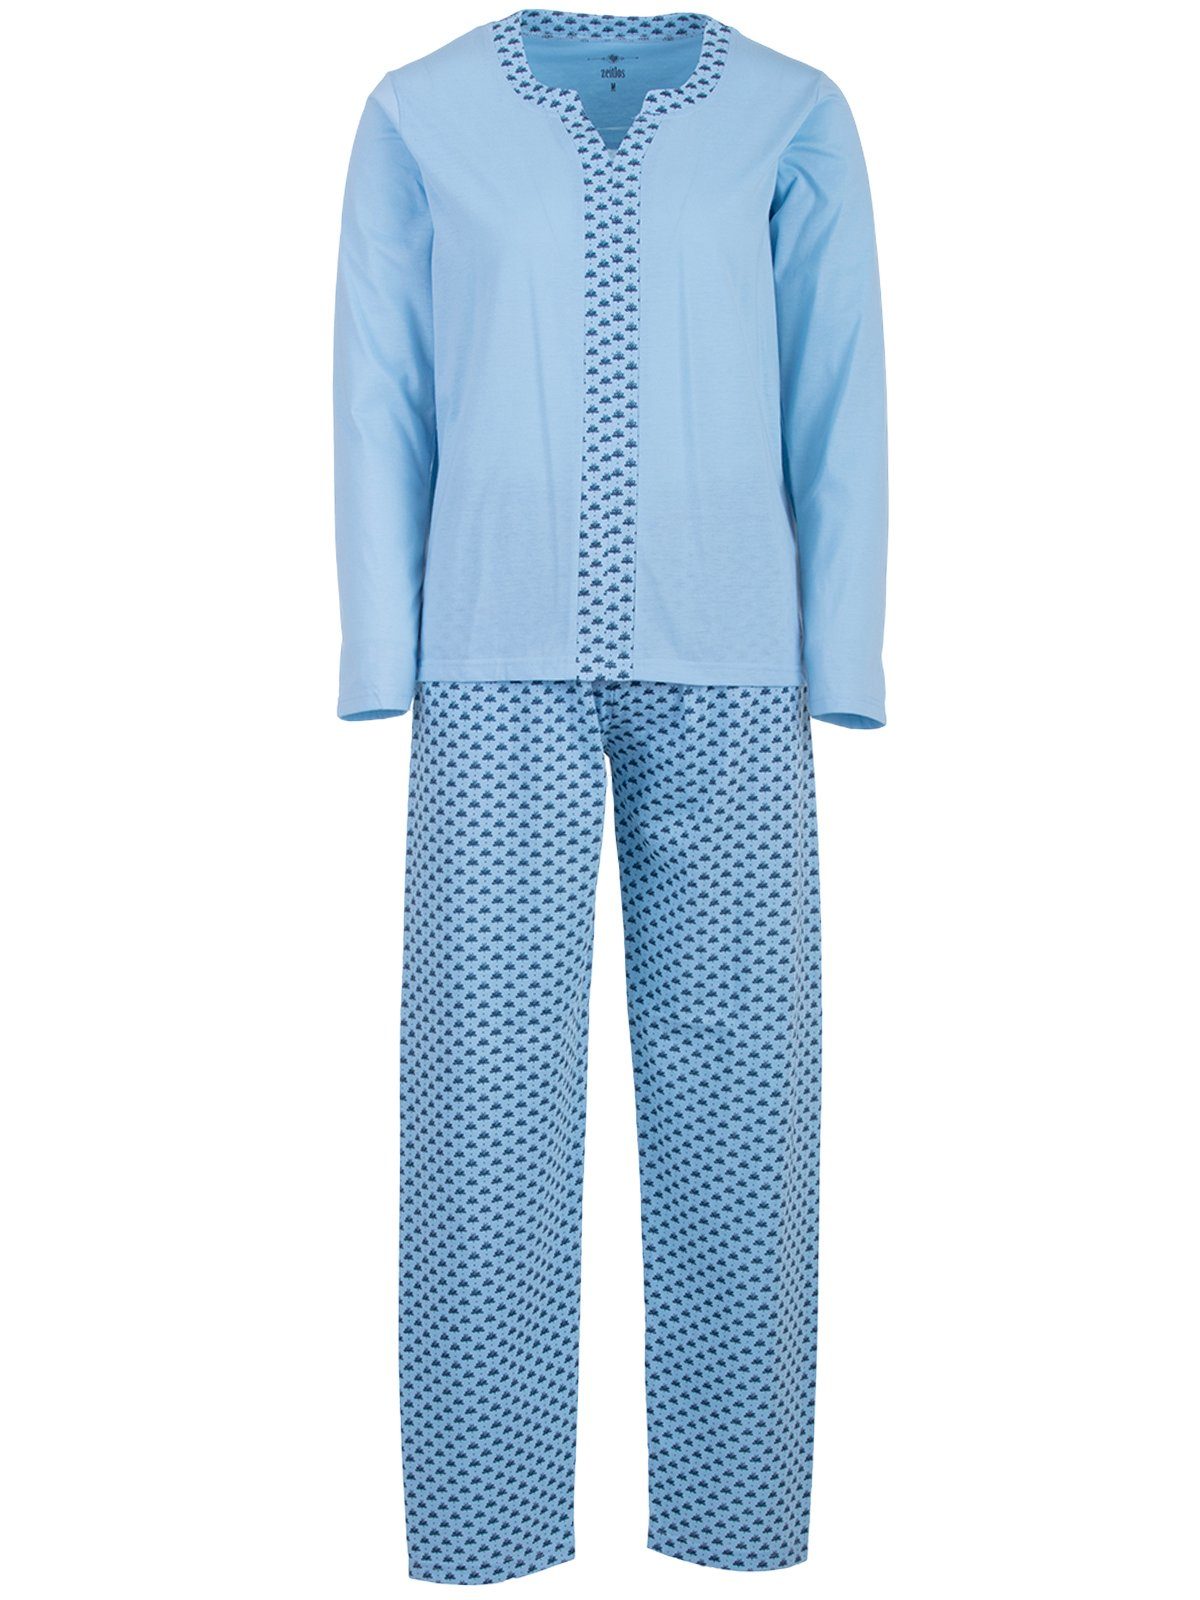 zeitlos Schlafanzug Pyjama Set Langarm - Borte Blumen blau